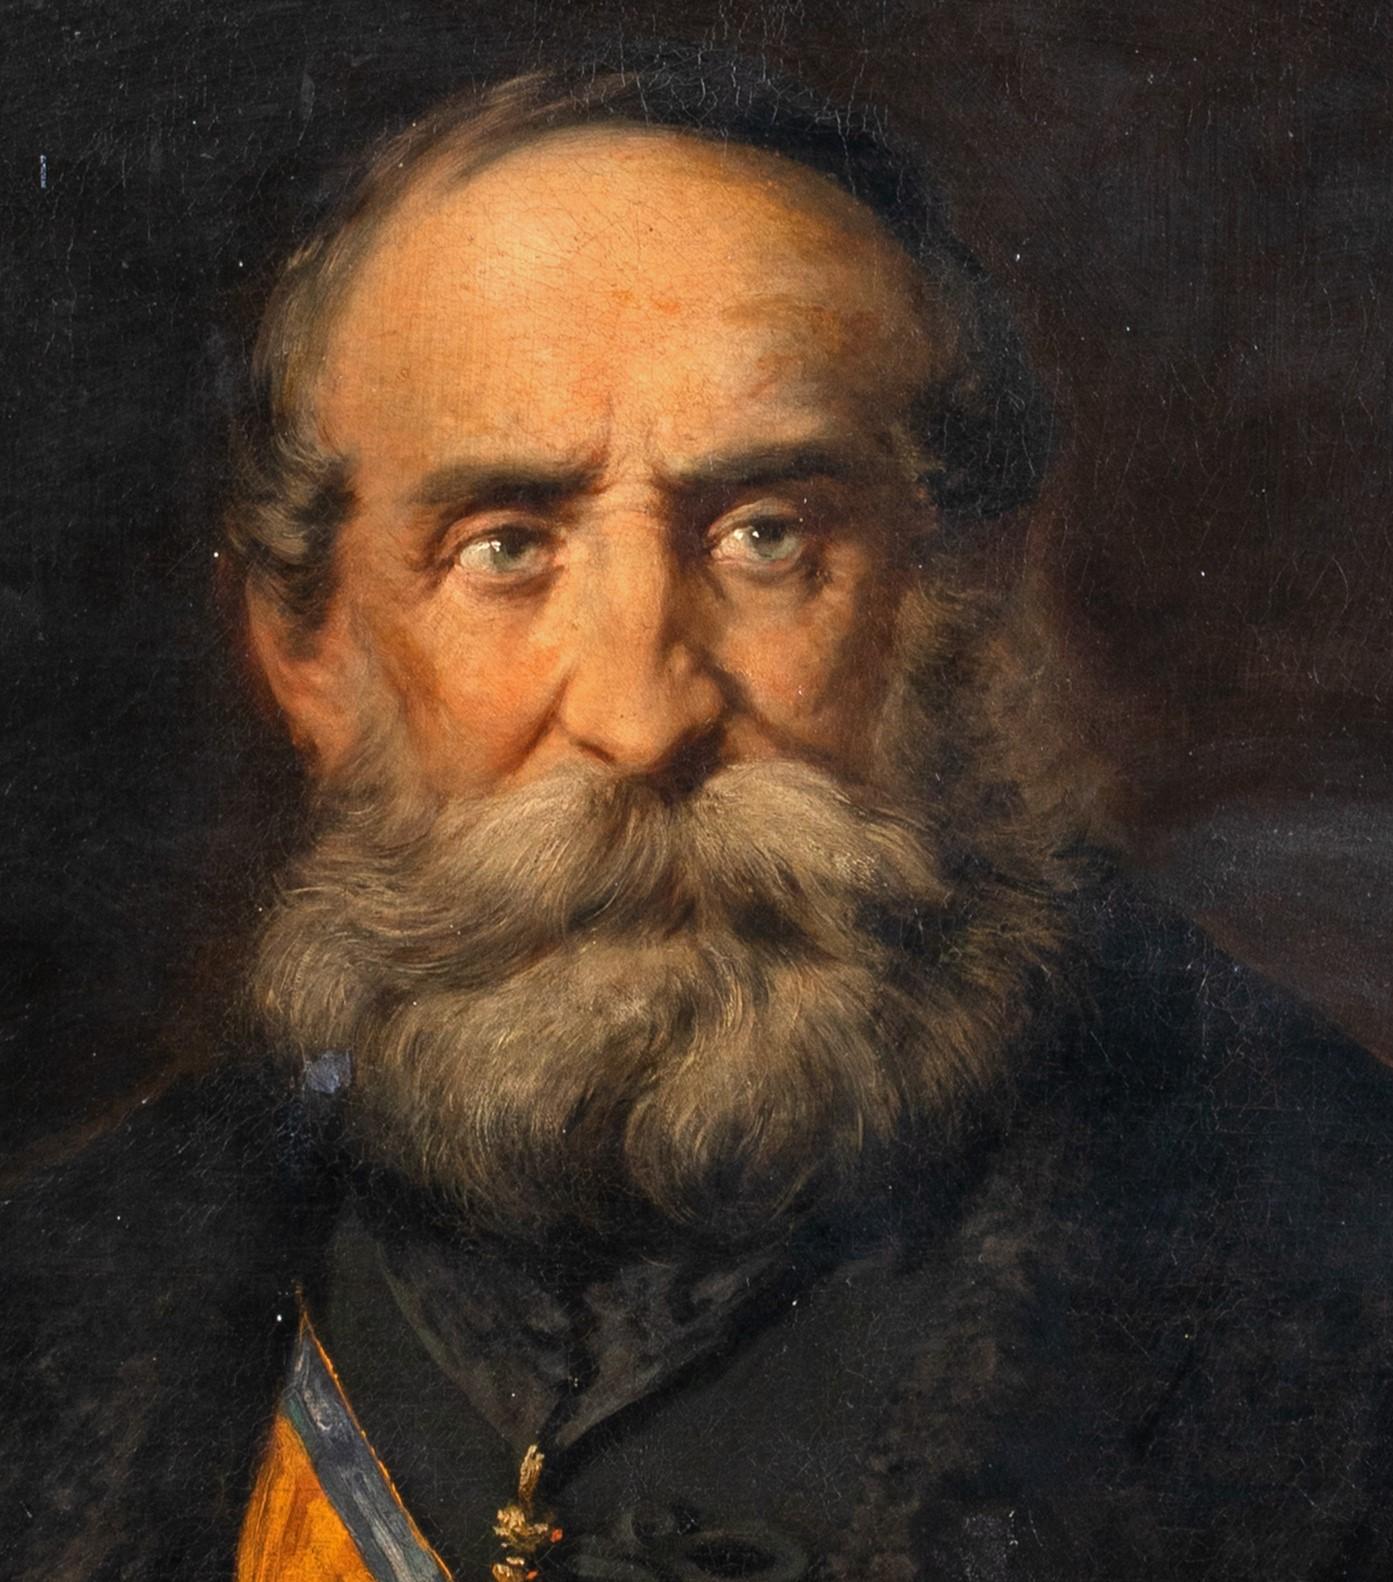 Portrait Of Giuseppe Garibaldi (1807-1882), 19th Century - Black Portrait Painting by Unknown